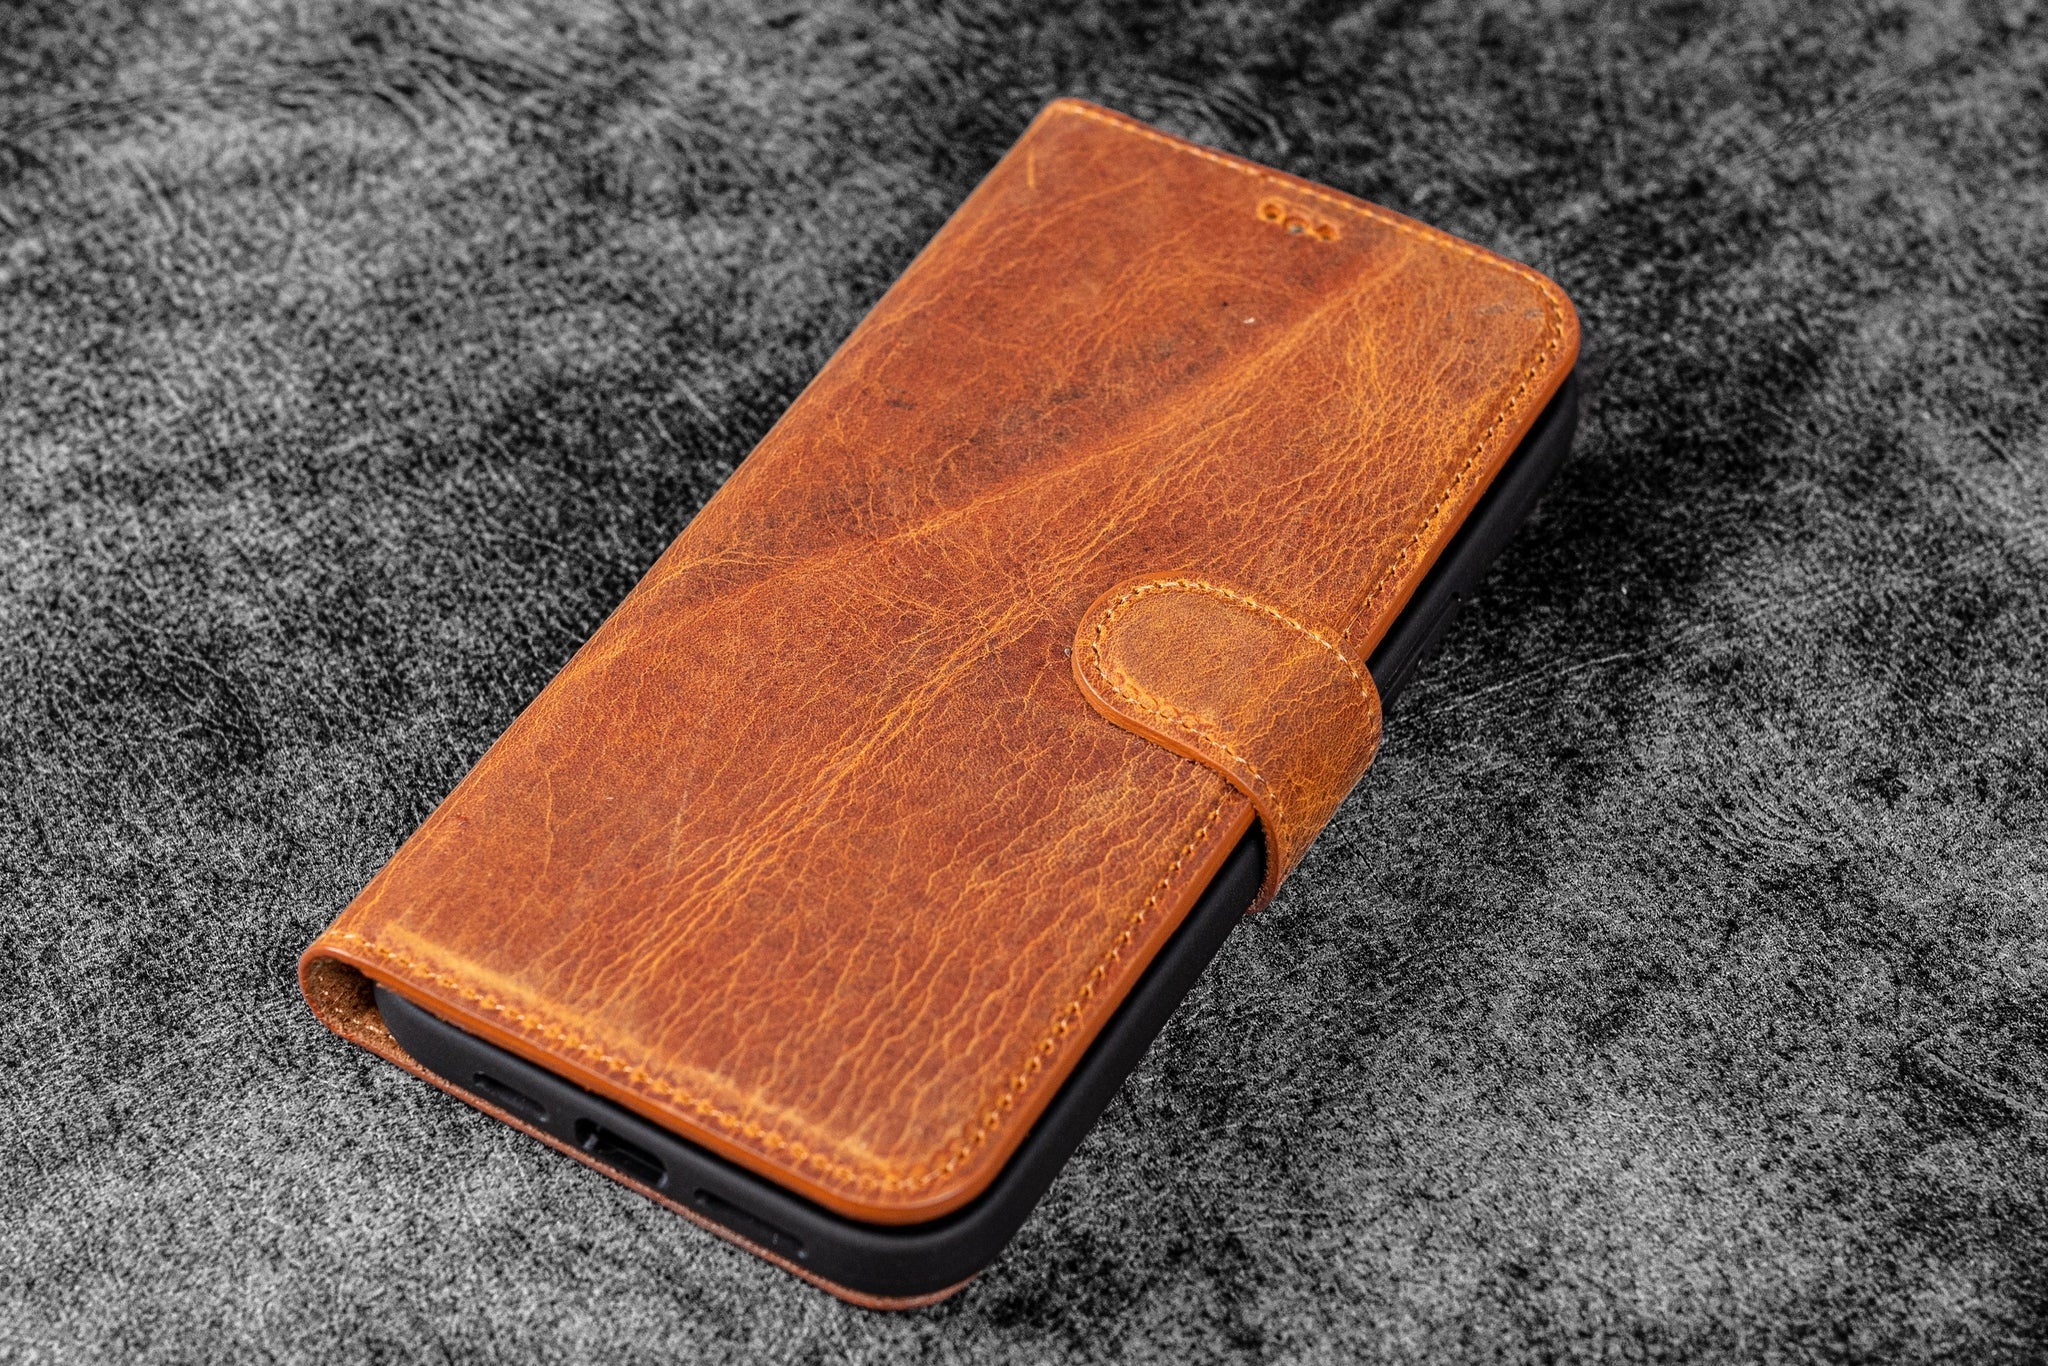 Galen Leather Detachable iPhone 11 Pro Leather Wallet Case